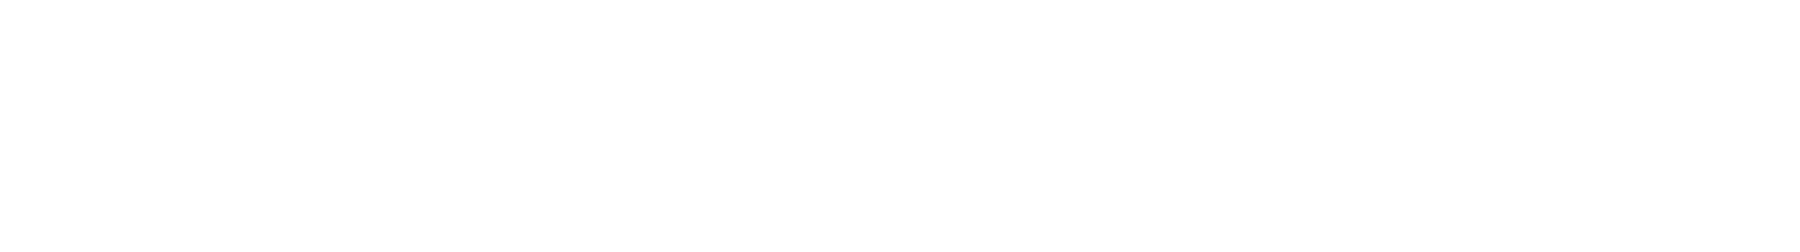 Church of the Nazarene White Logo - Transparent